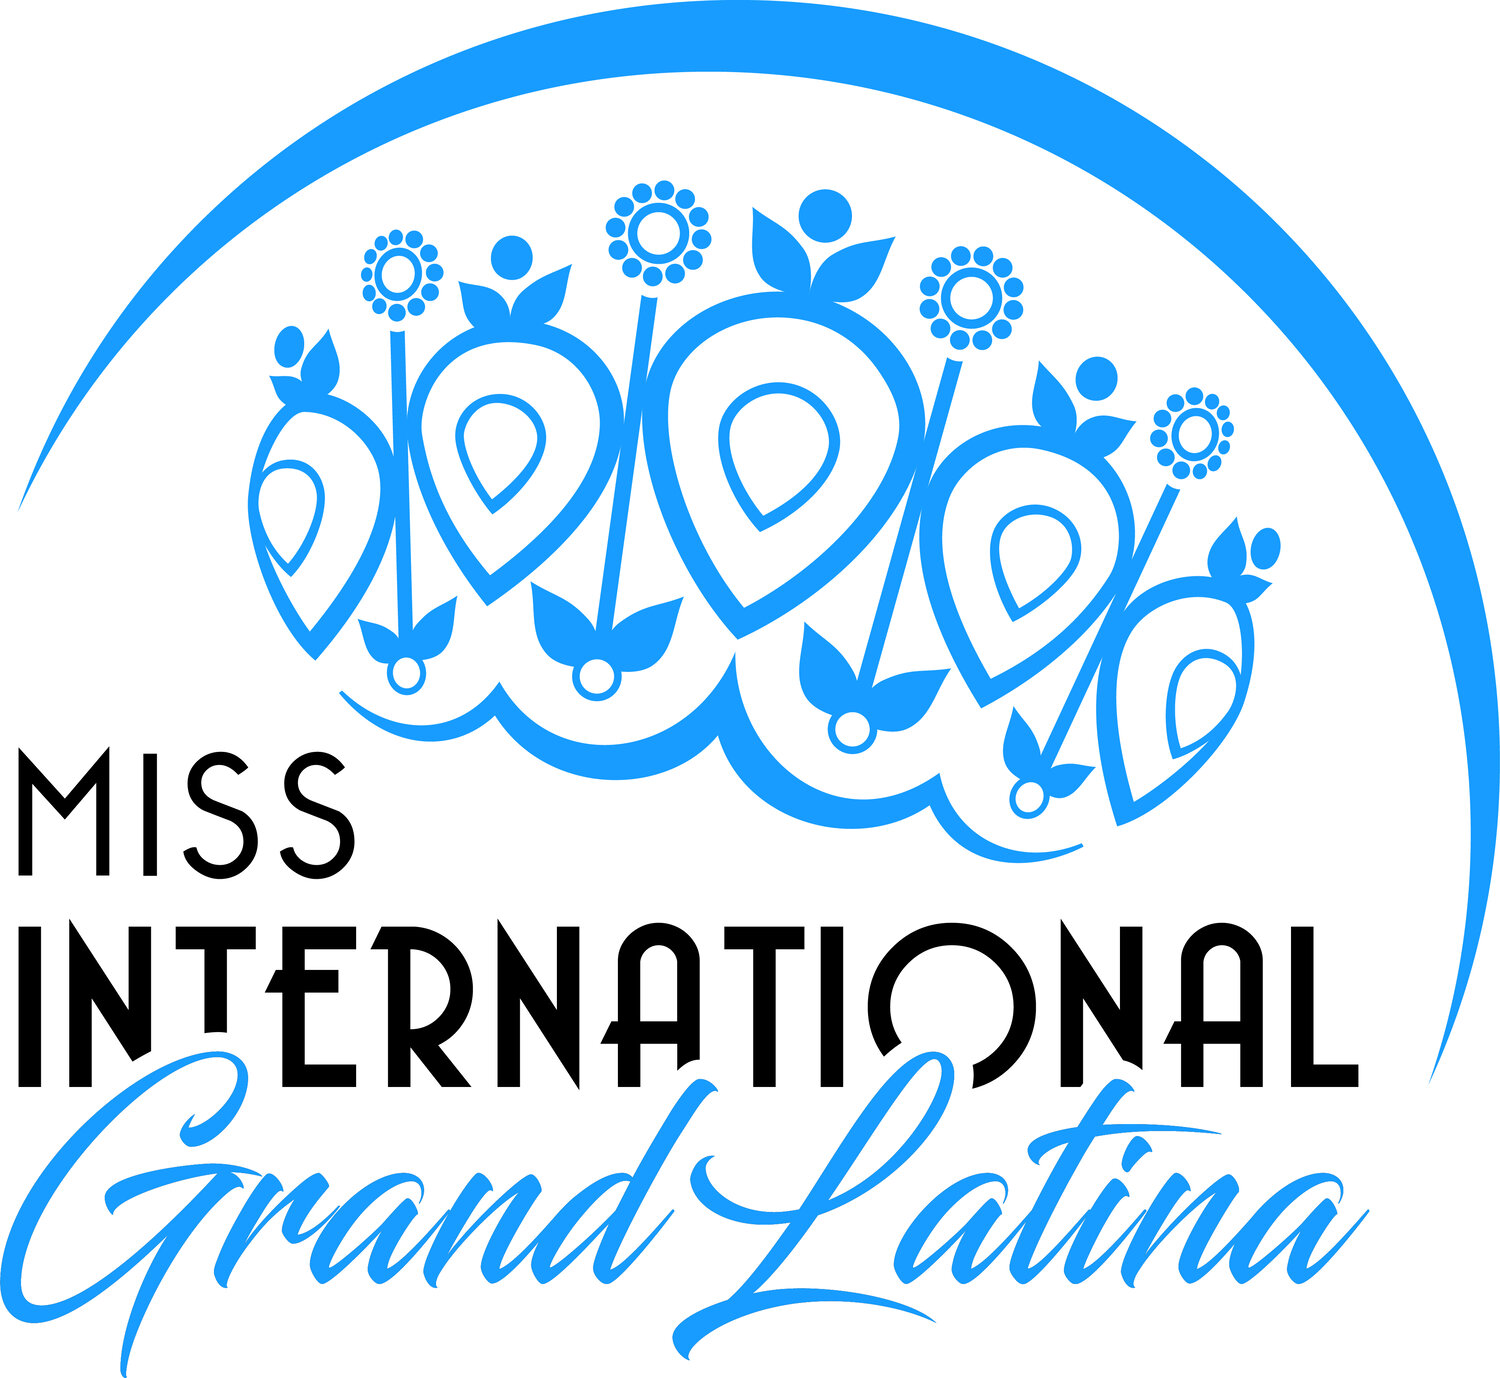 Miss International Grand Latina